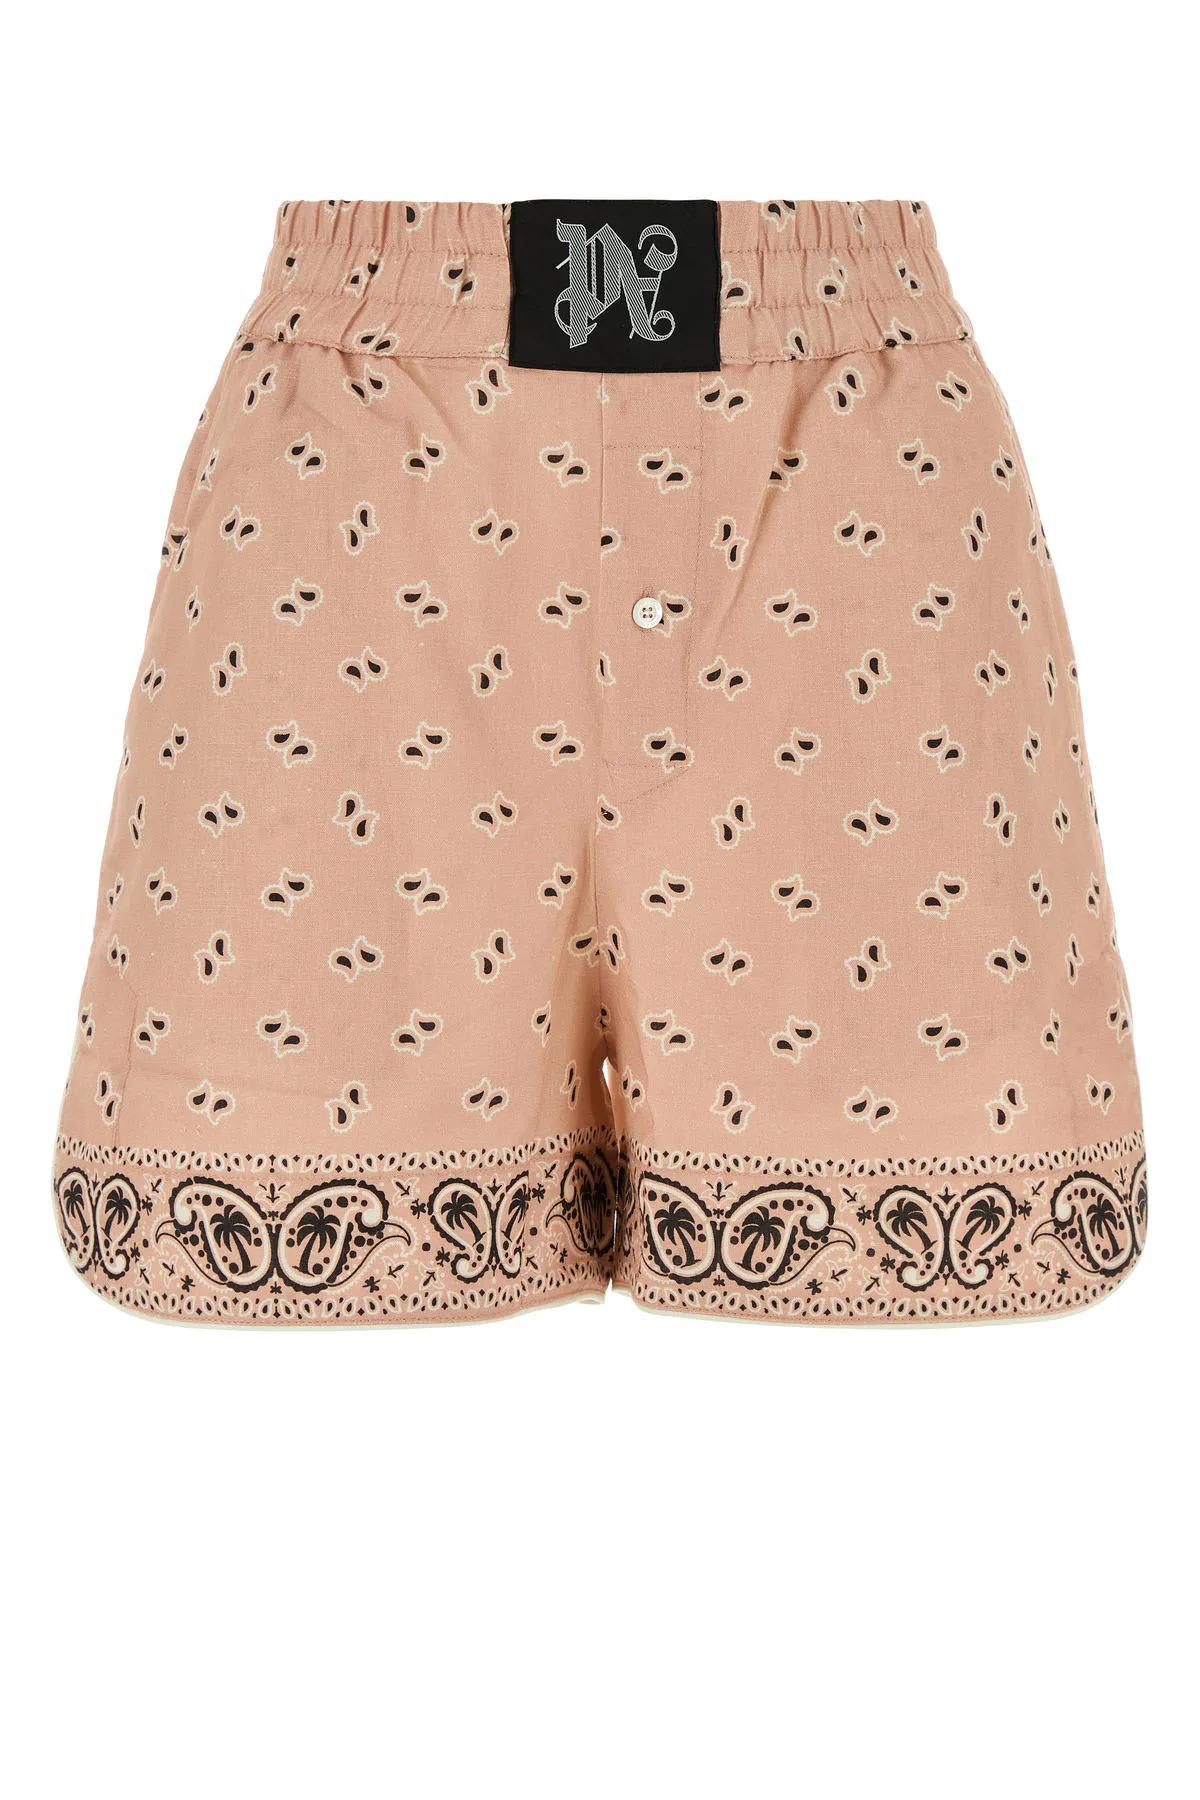 Palm Angels Printed Linen Blend Shorts In Pink/black